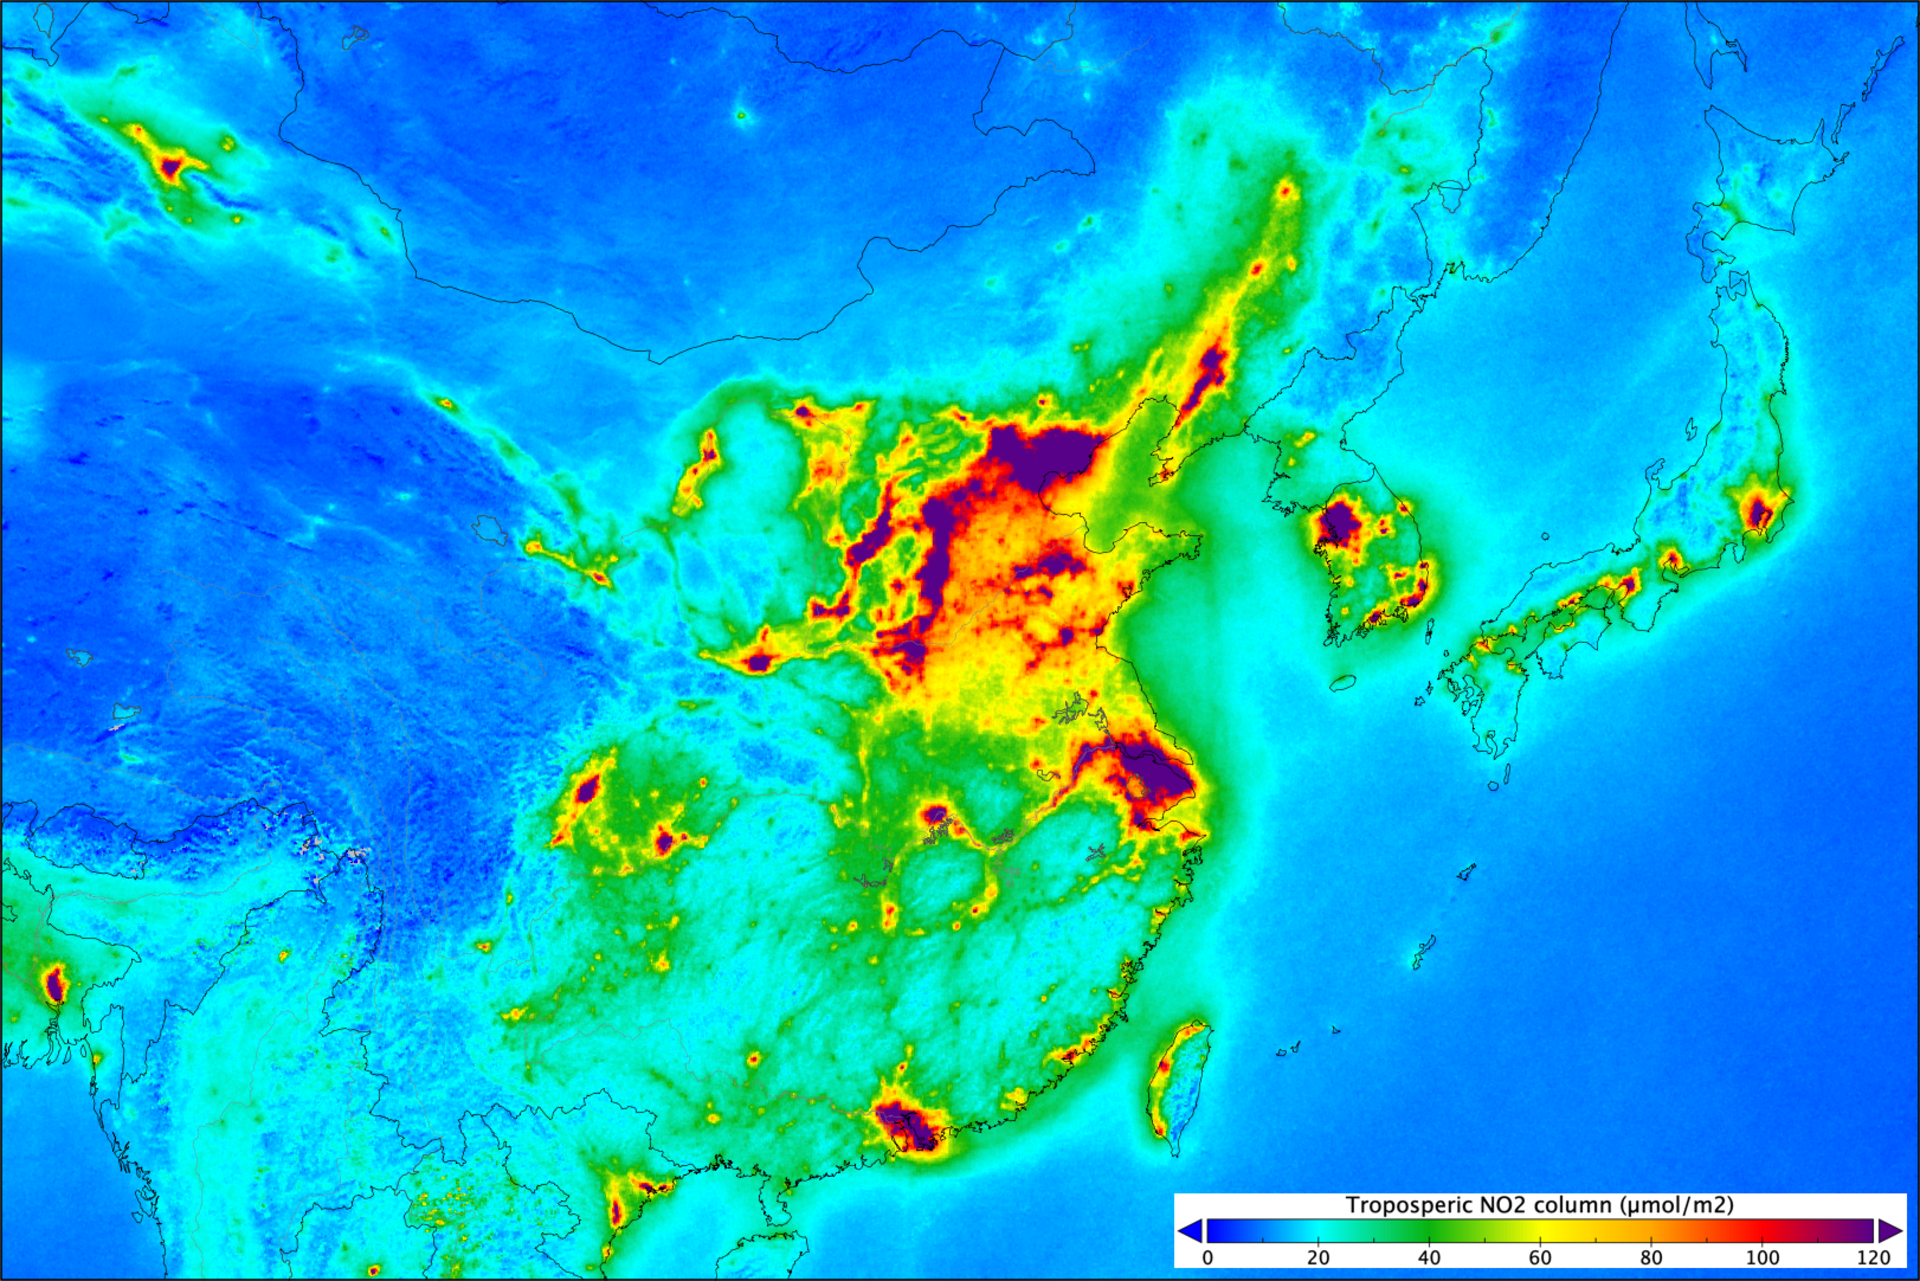 Nitrogen dioxide levels over China and Japan